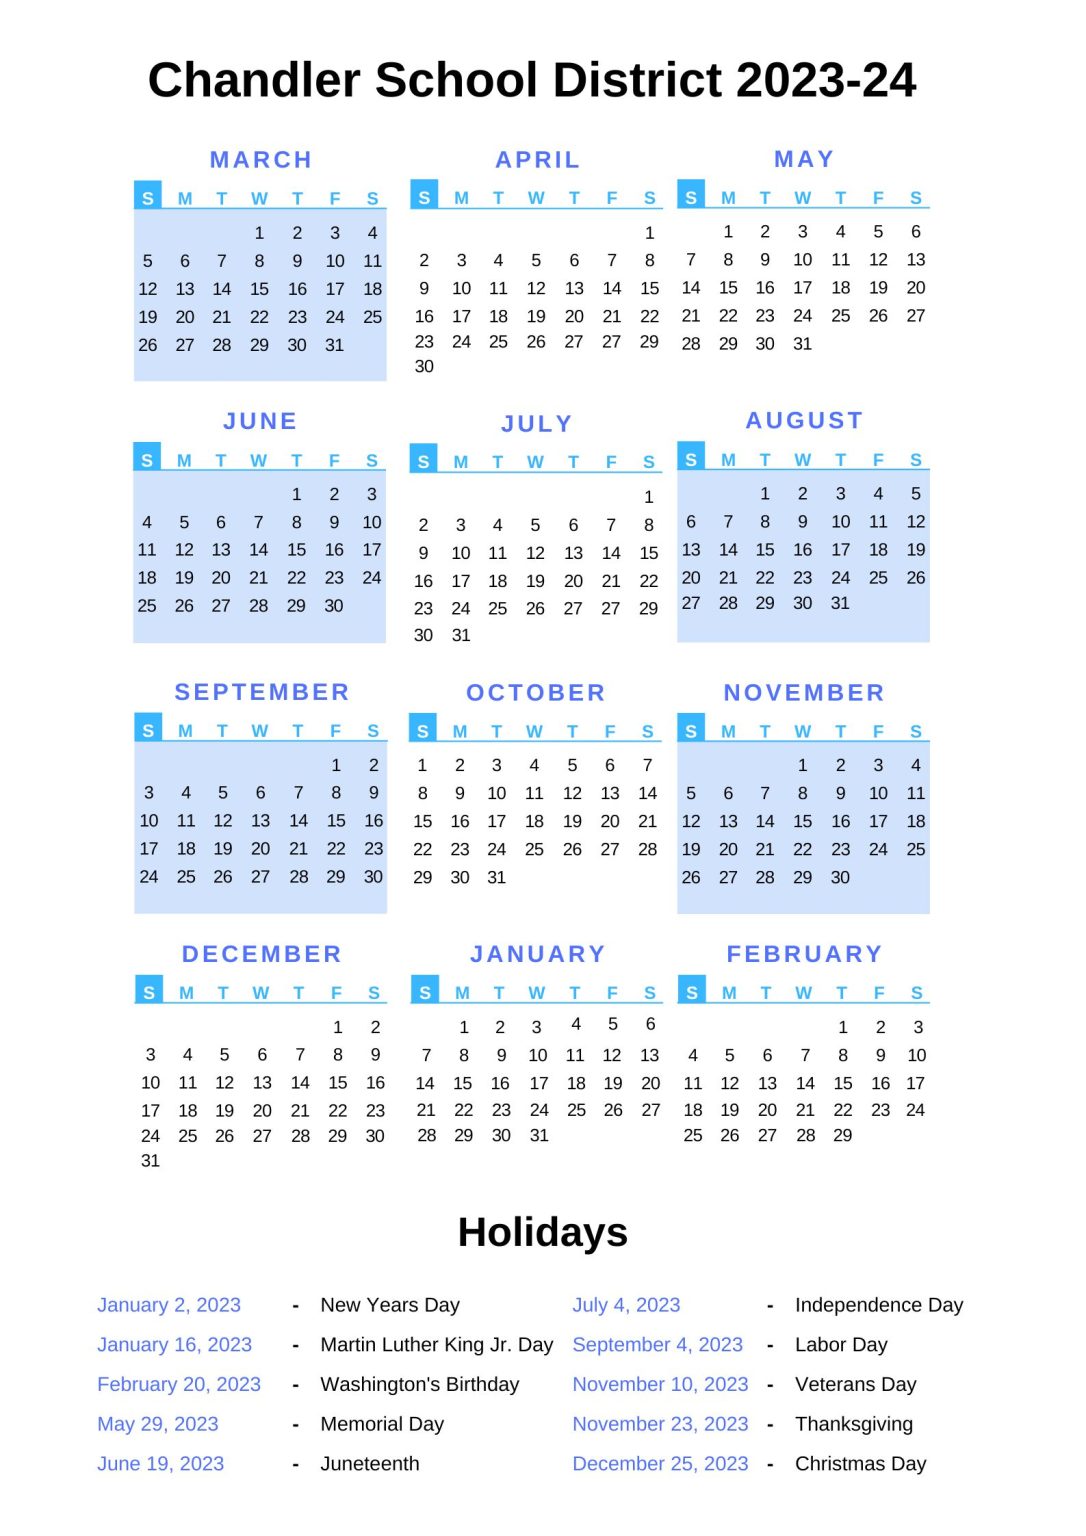 Chandler School District Calendar [CSD] 202324 With Holidays